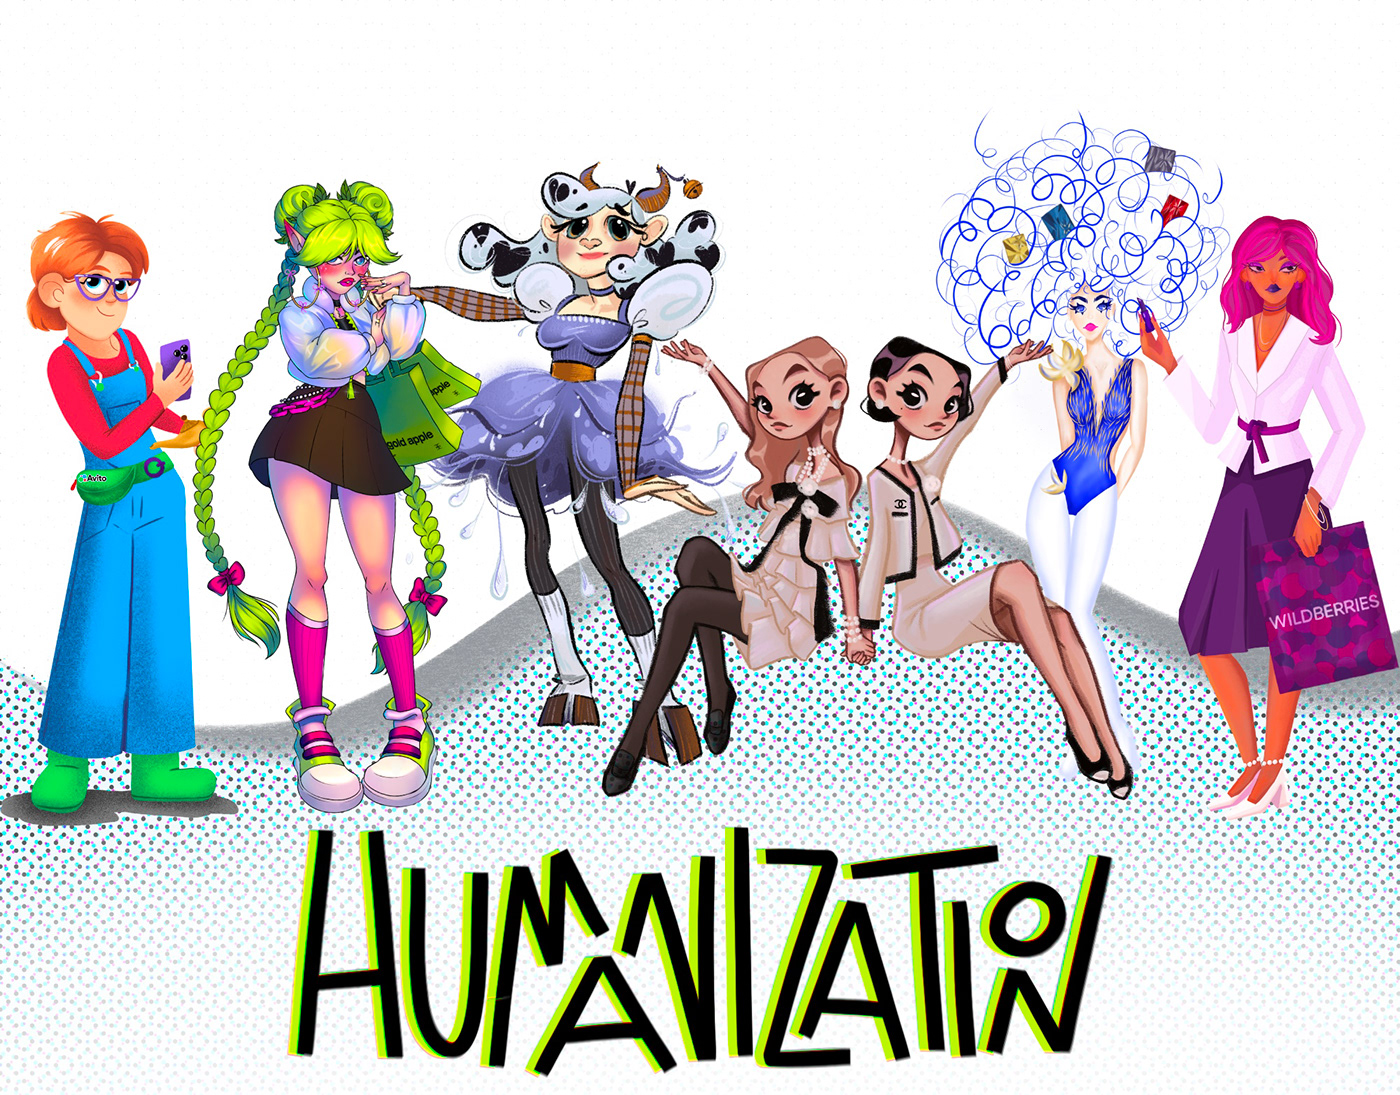 Character design  character designs Character characters ILLUSTRATION  brand illustration Humanization digital illustration Mascot cartoon